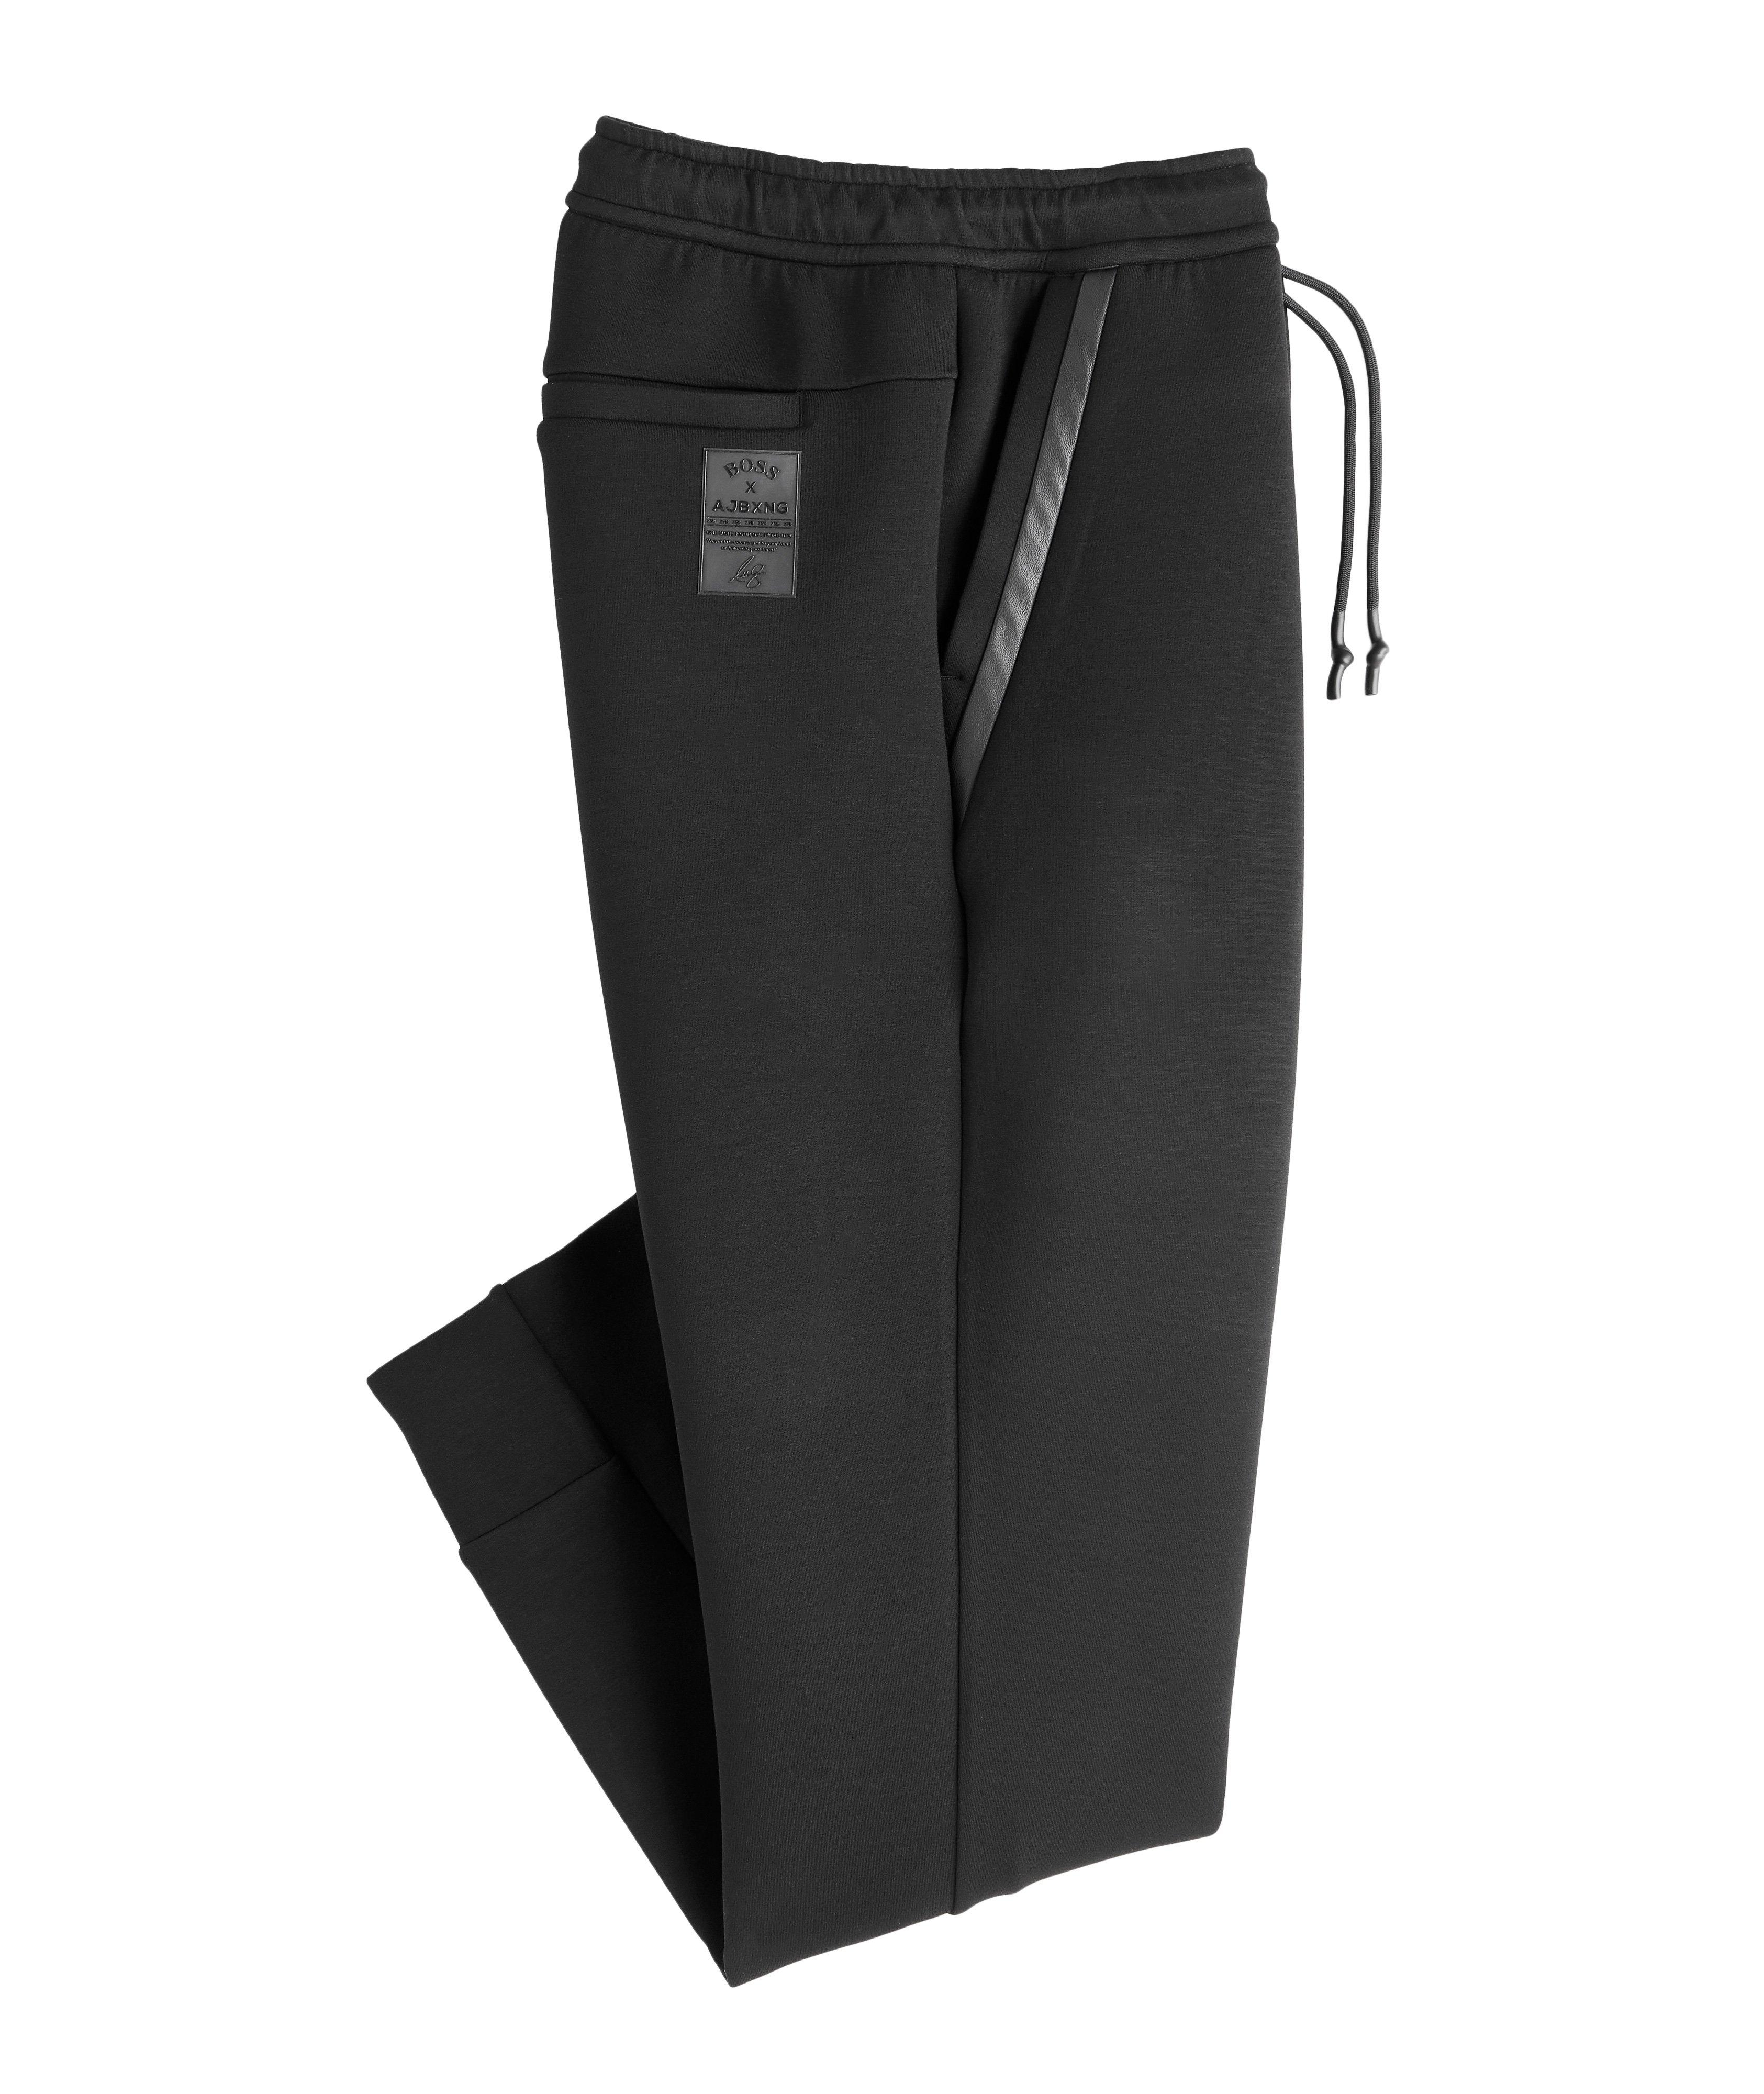 Pantalon sport en coton extensible, collection AJBXNG image 0